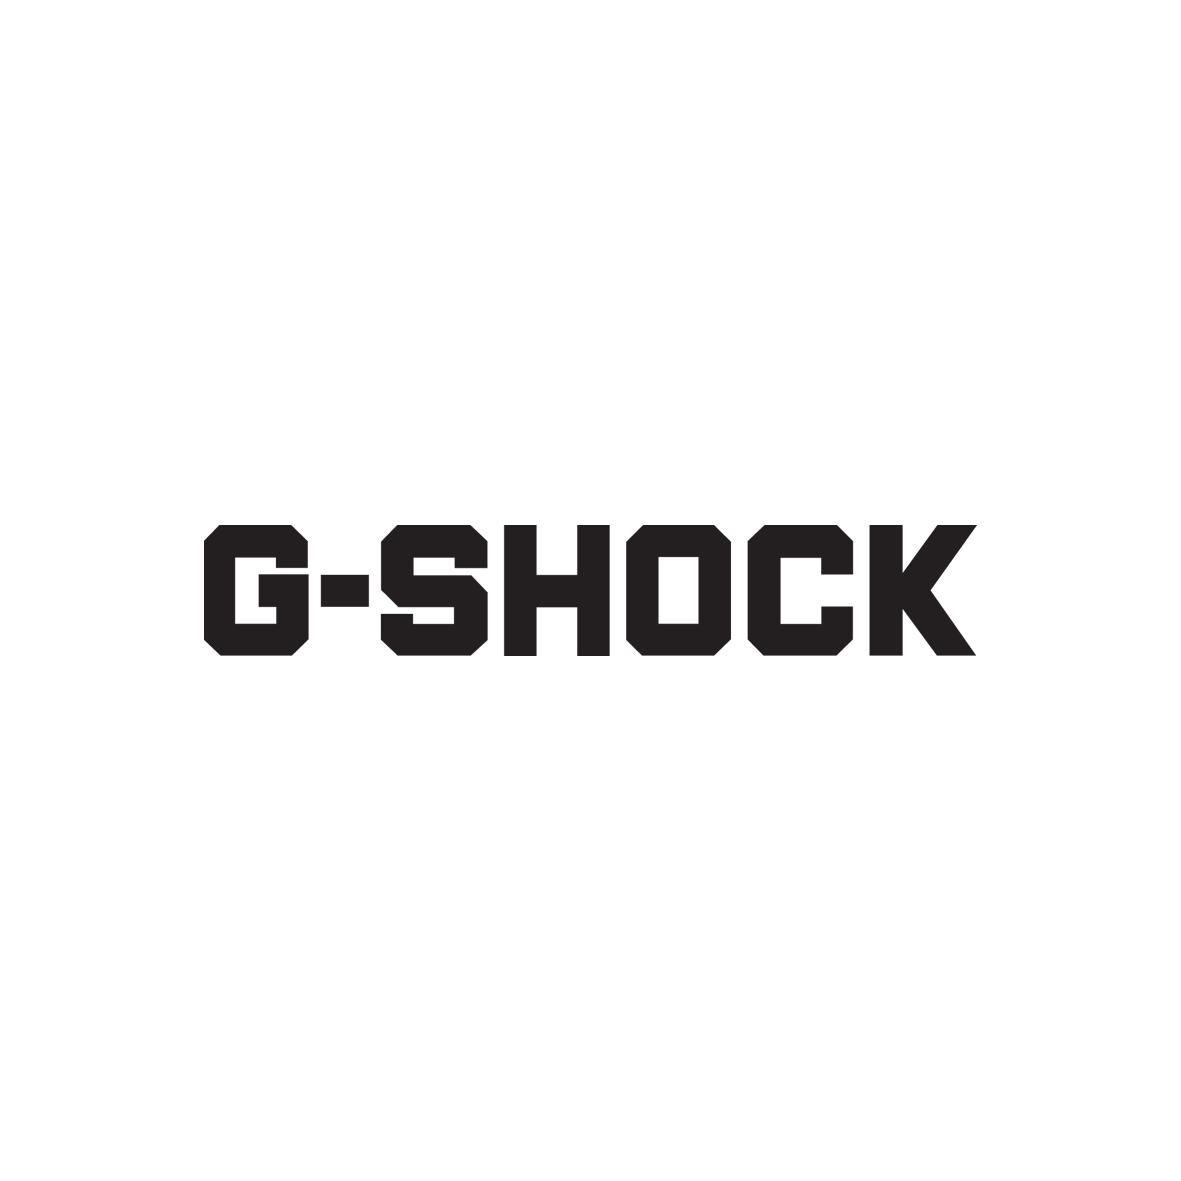 G-SHOCK(ジーショック)